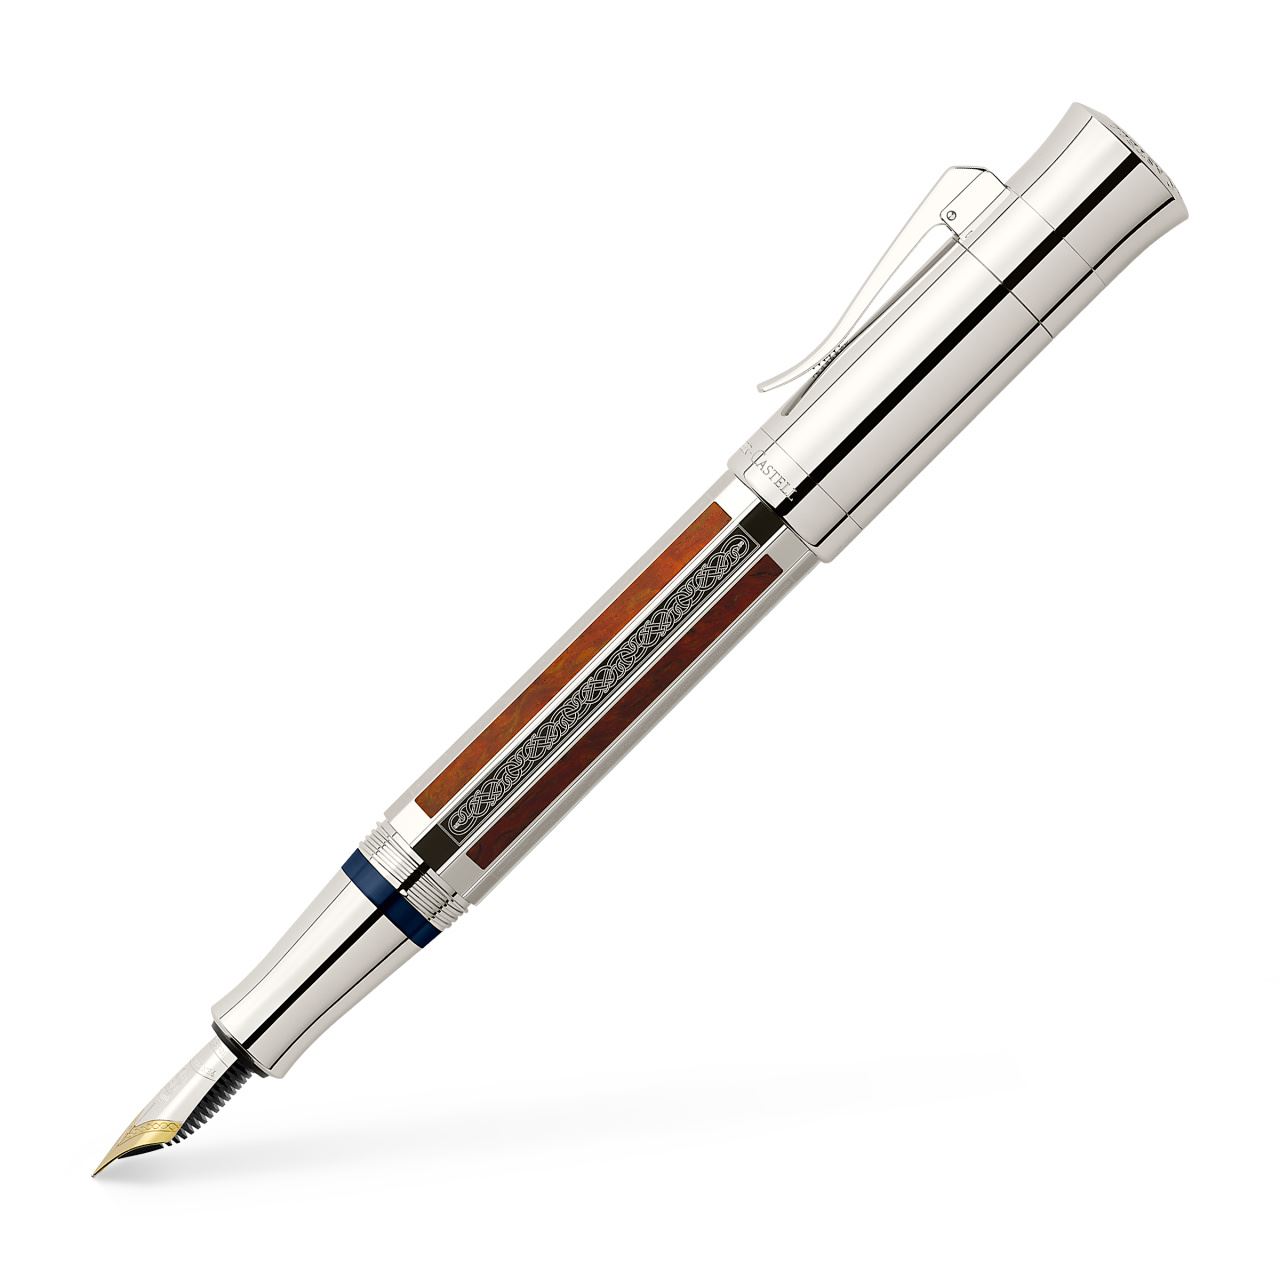 Graf-von-Faber-Castell - Fountain pen Pen of the Year 2017 platinum-plated, Fine